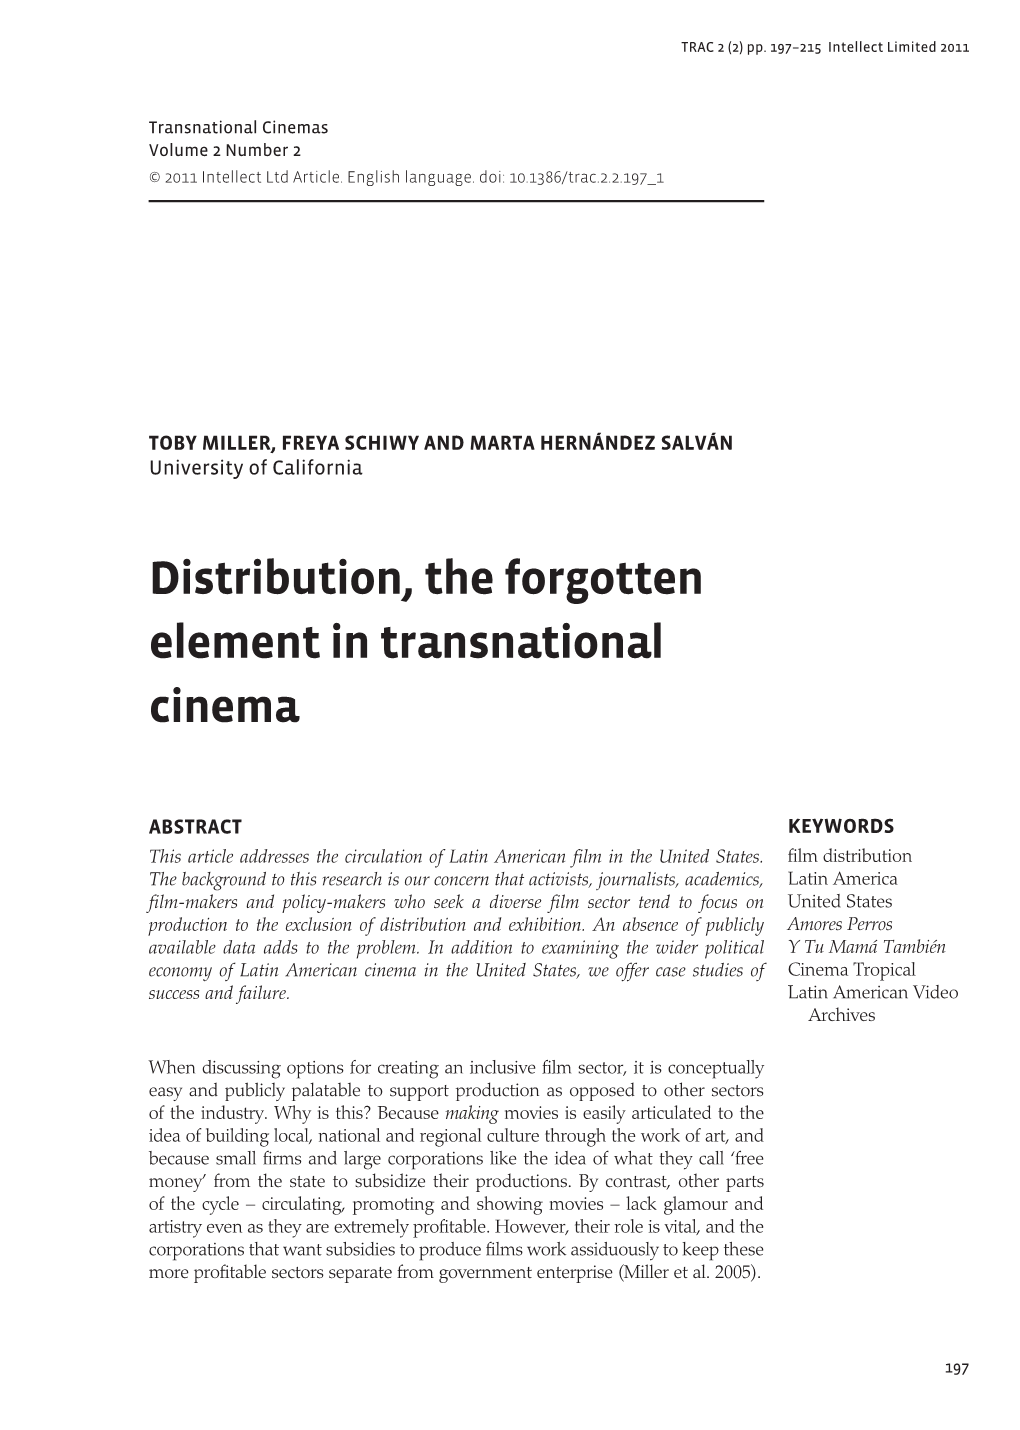 Distribution, the Forgotten Element in Transnational Cinema